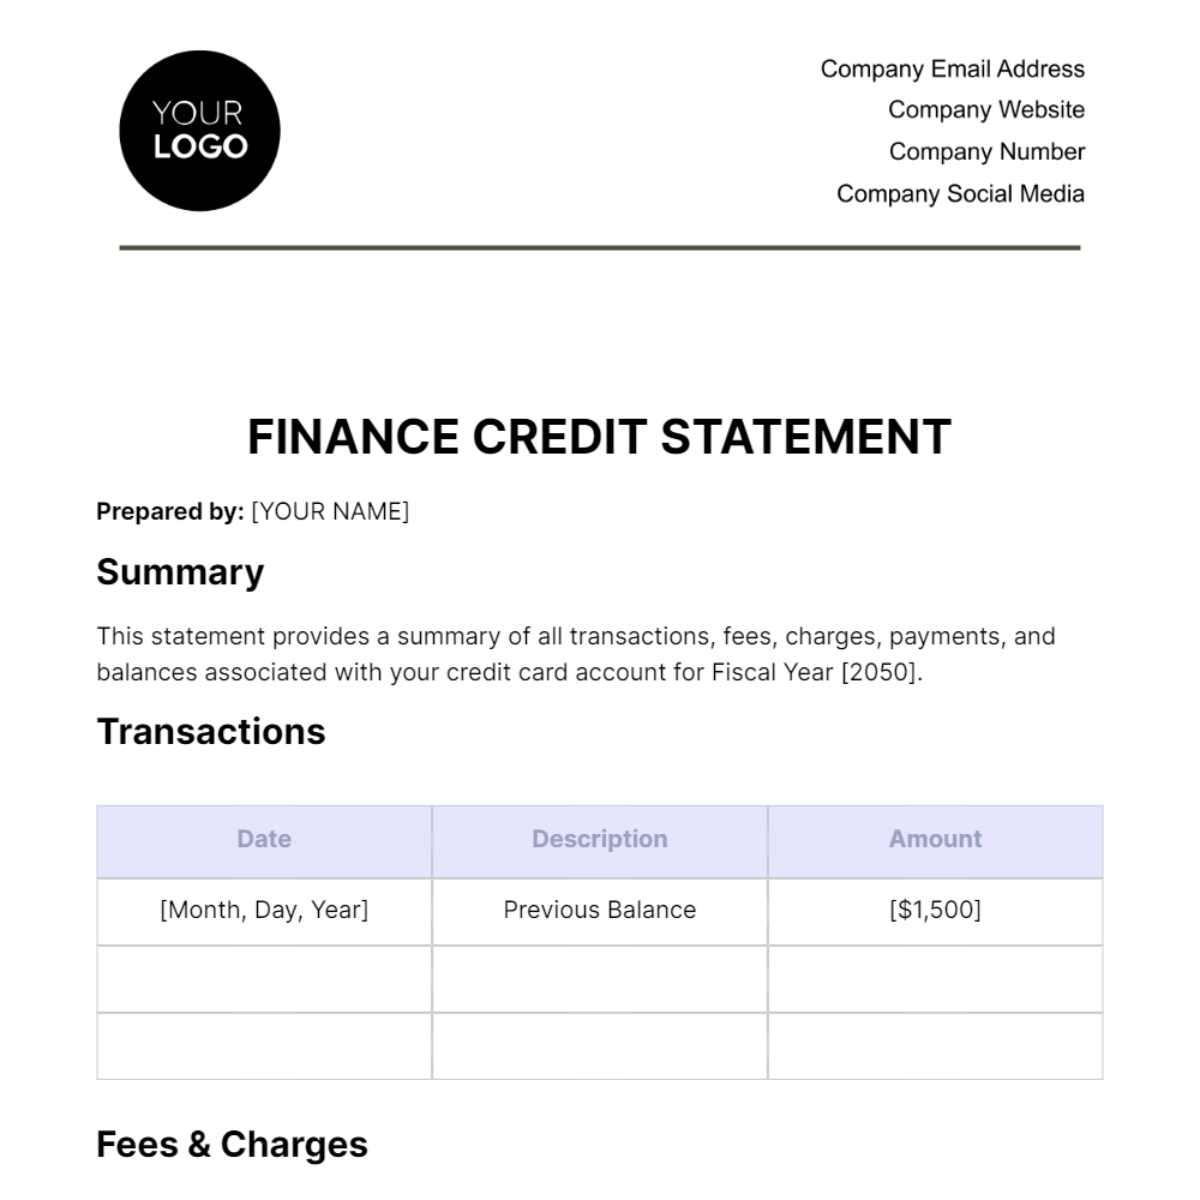 Finance Credit Statement Template